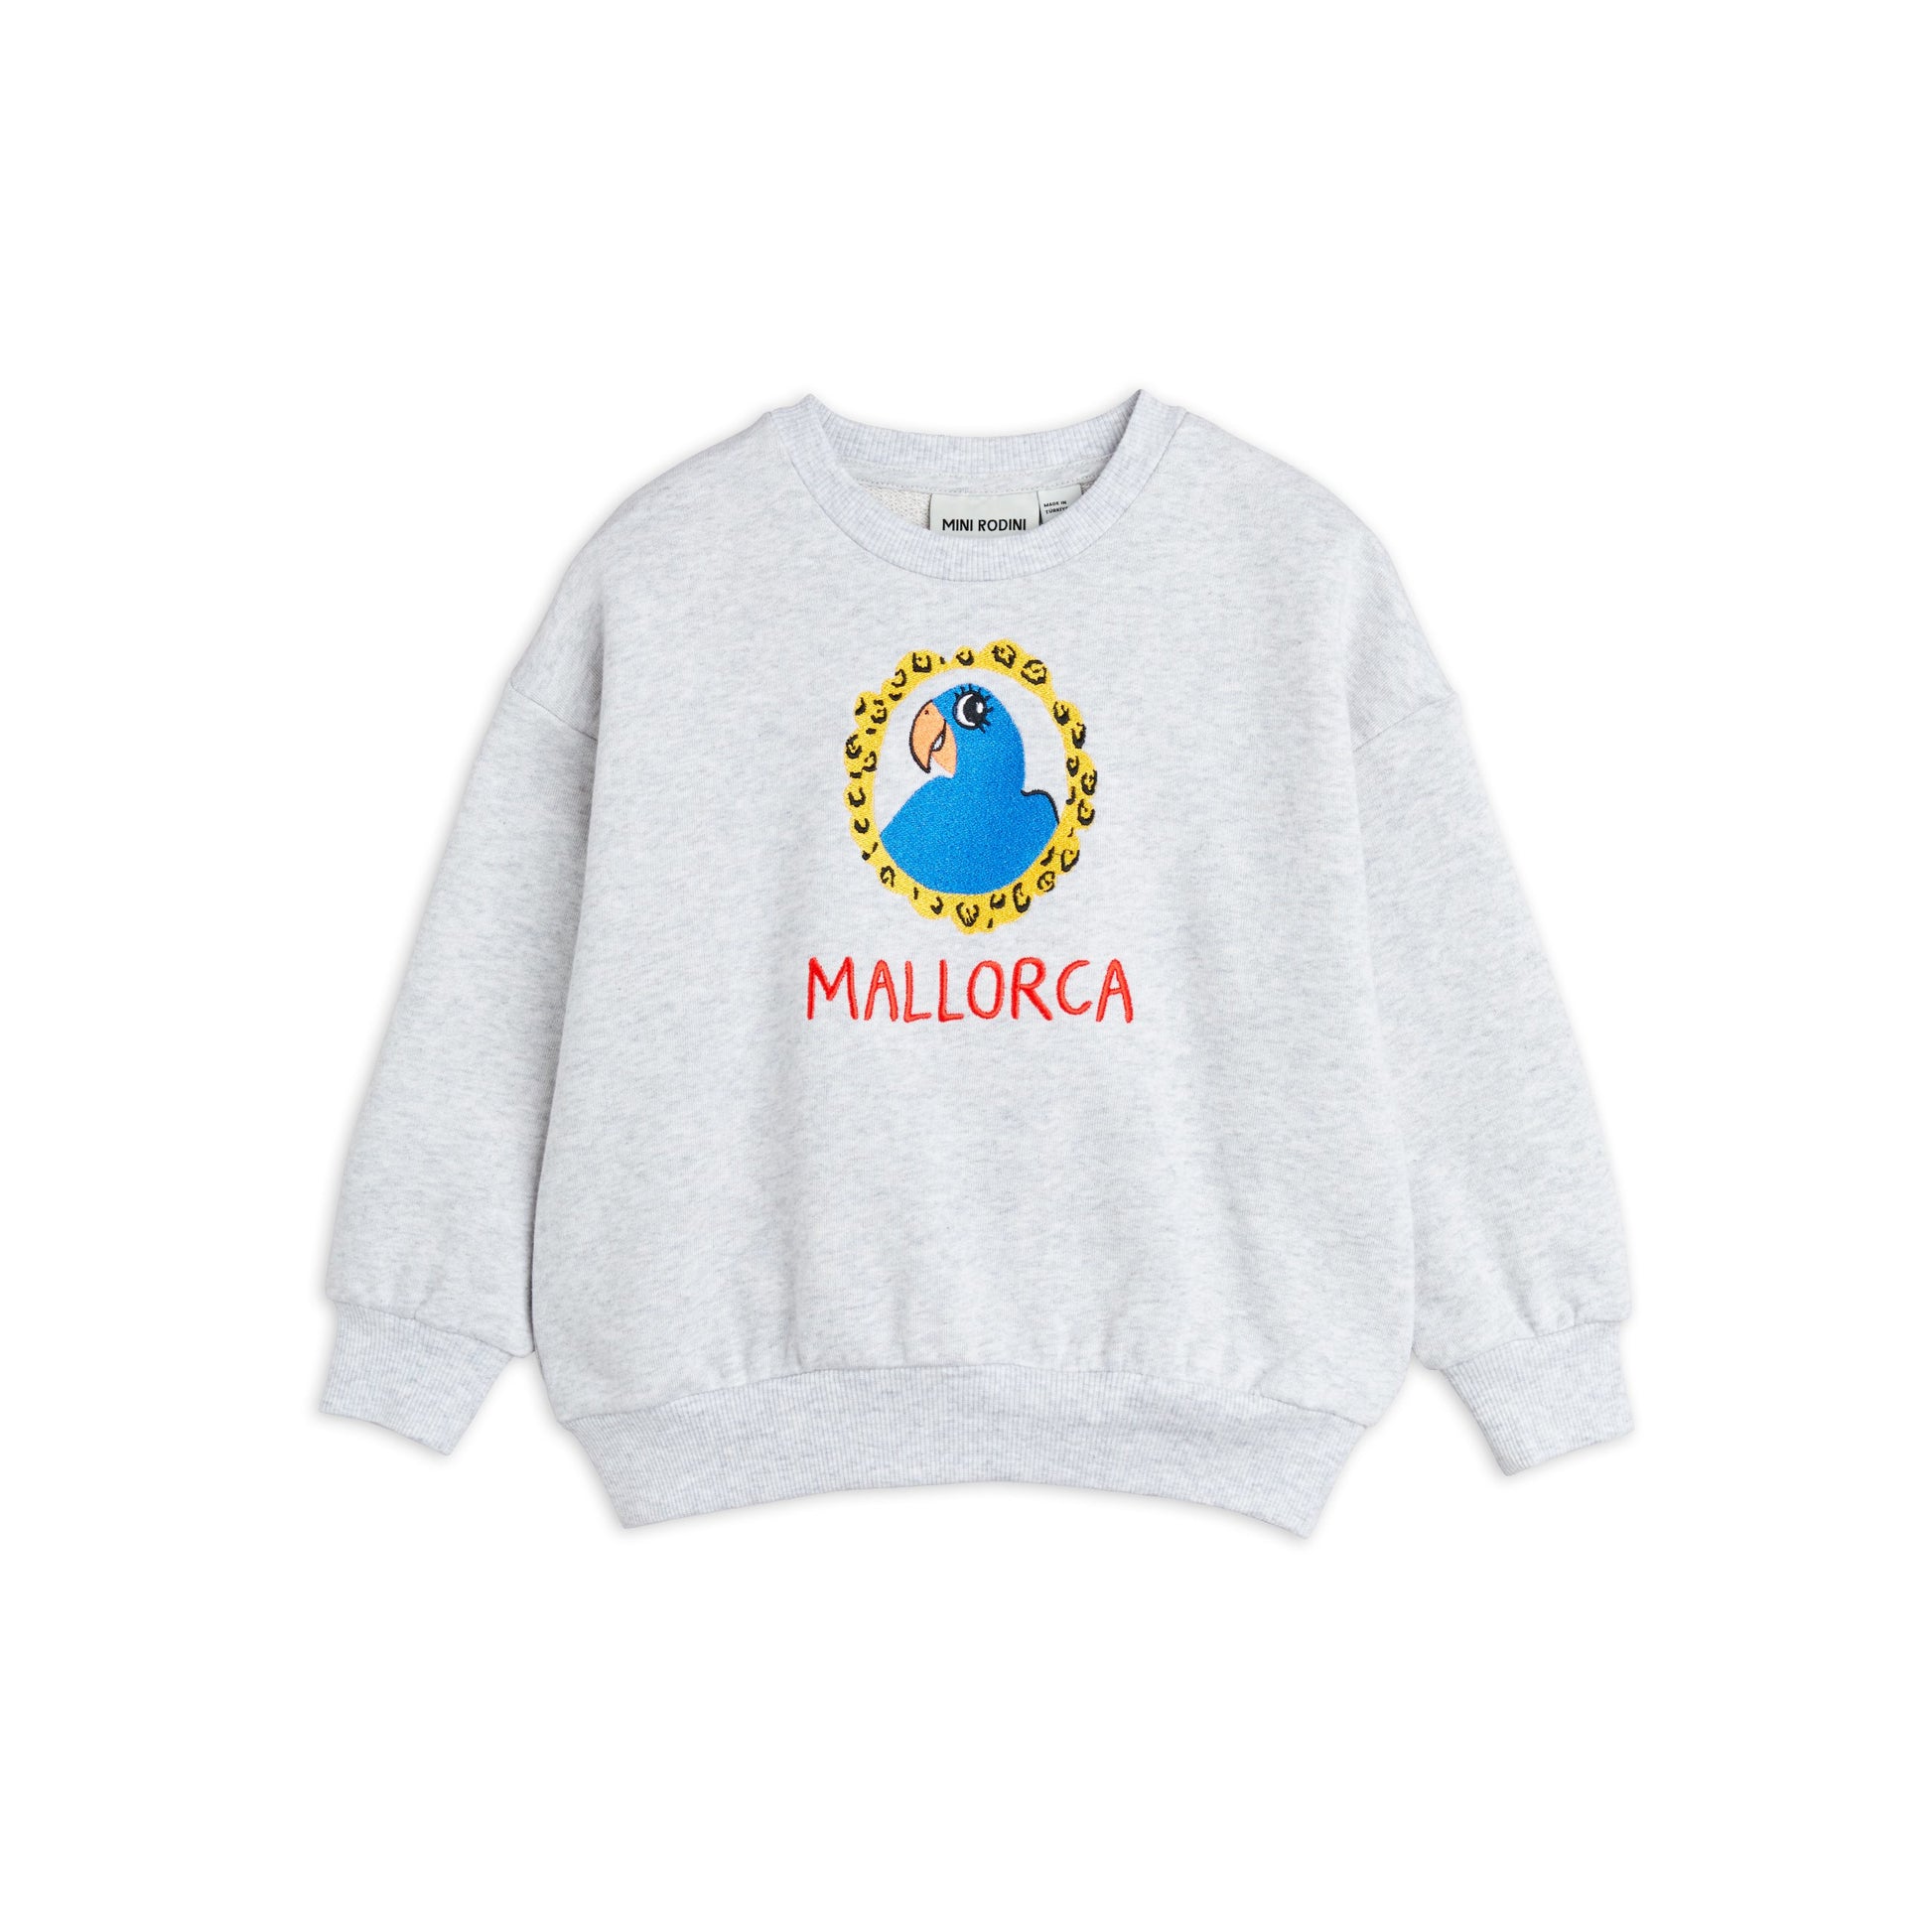 MINI RODINI Parrot Embroidered Sweatshirt Grey ALWAYS SHOW